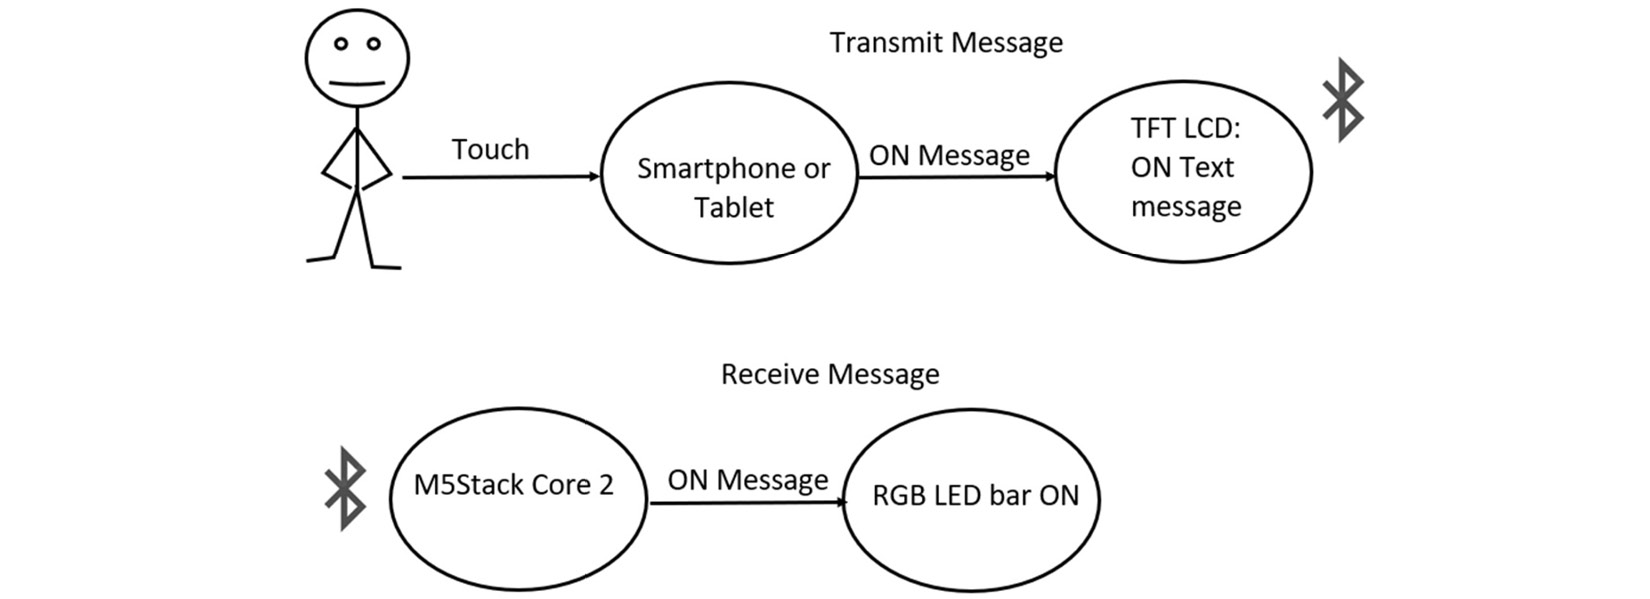 Figure 7.20: Sending an ON-control message